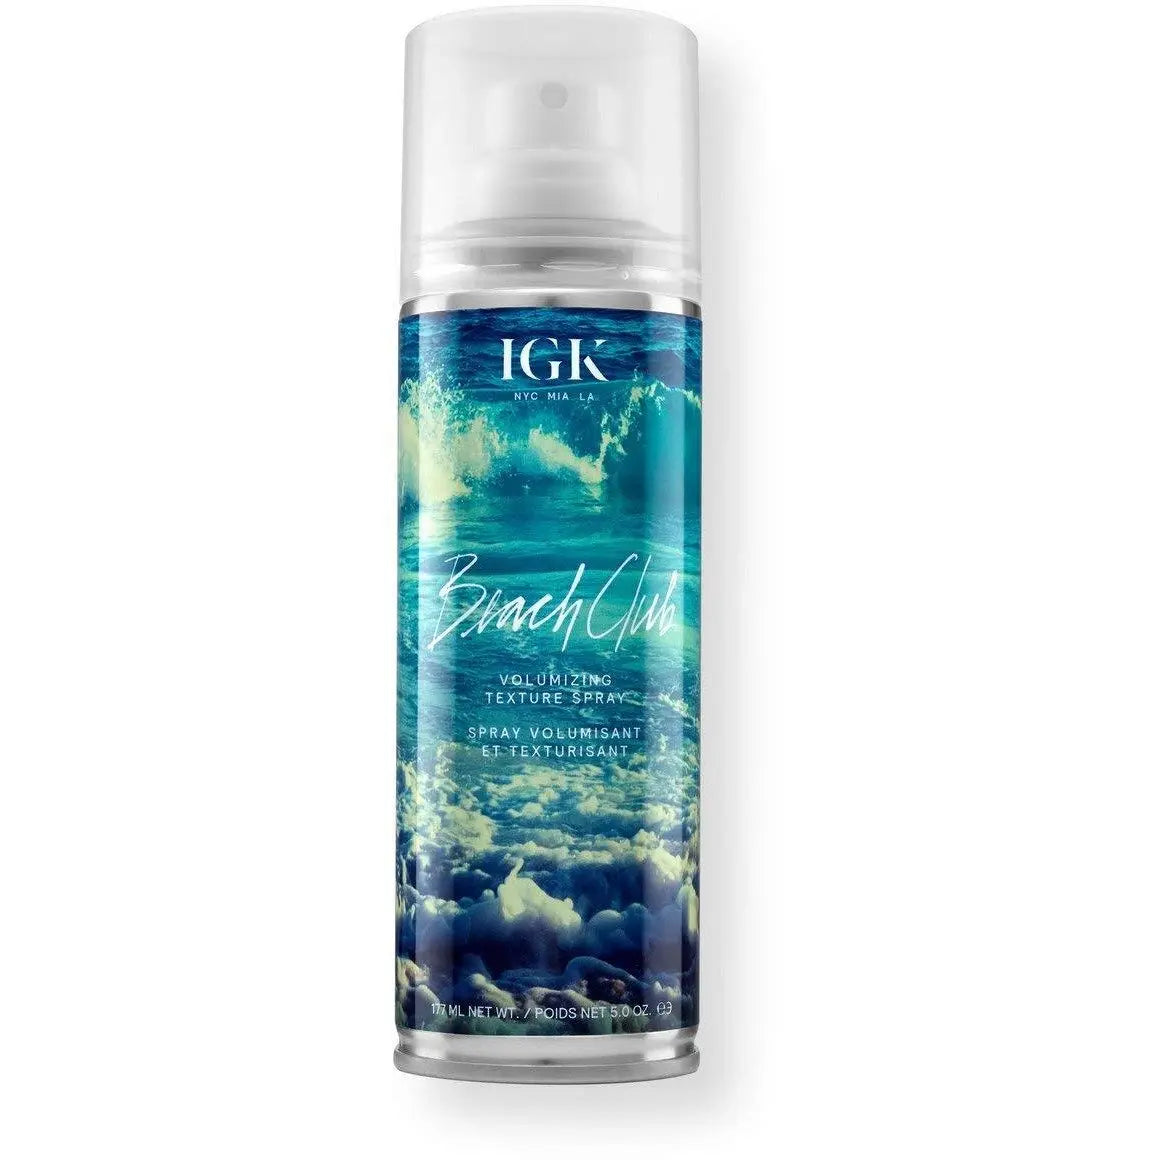 IGK Beach Club Volume Texture Spray